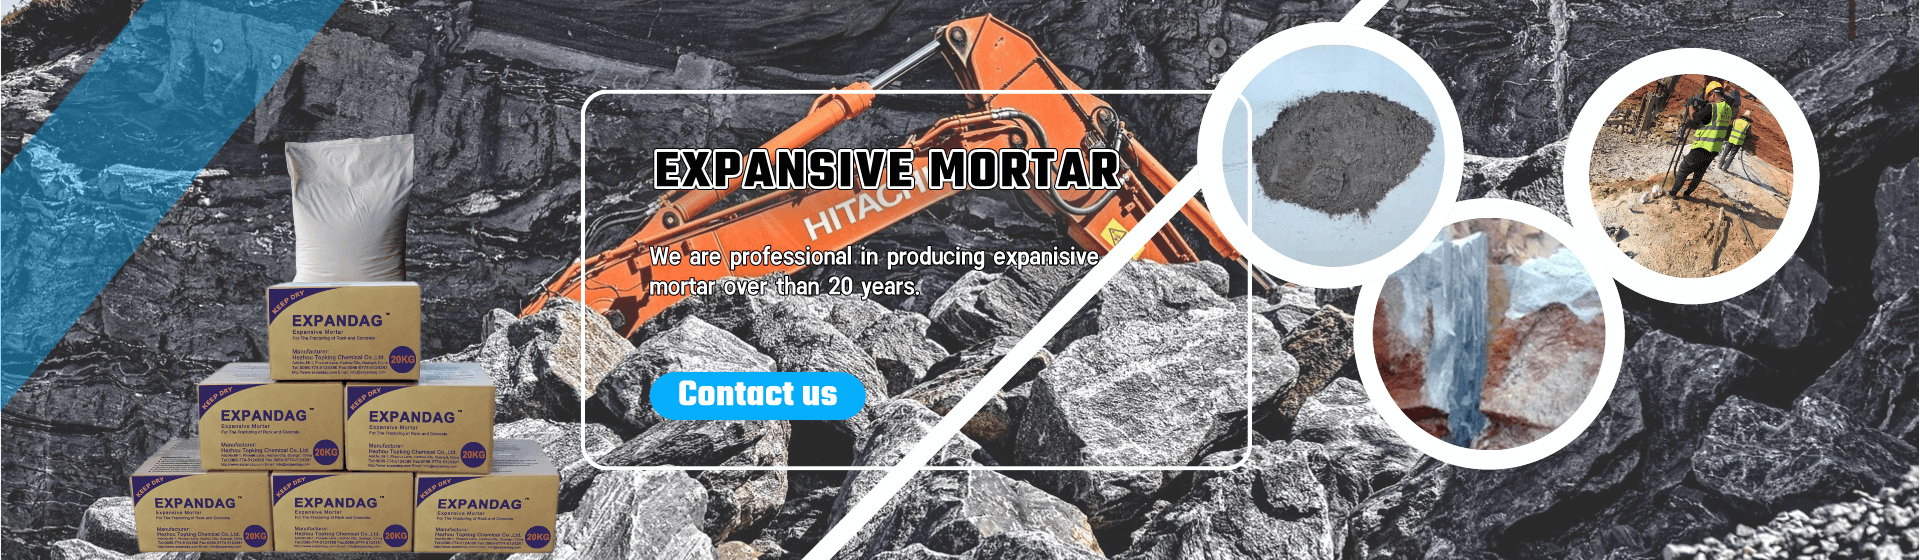 Expansive Mortar_Non-Explosive Demolition Agent-banner